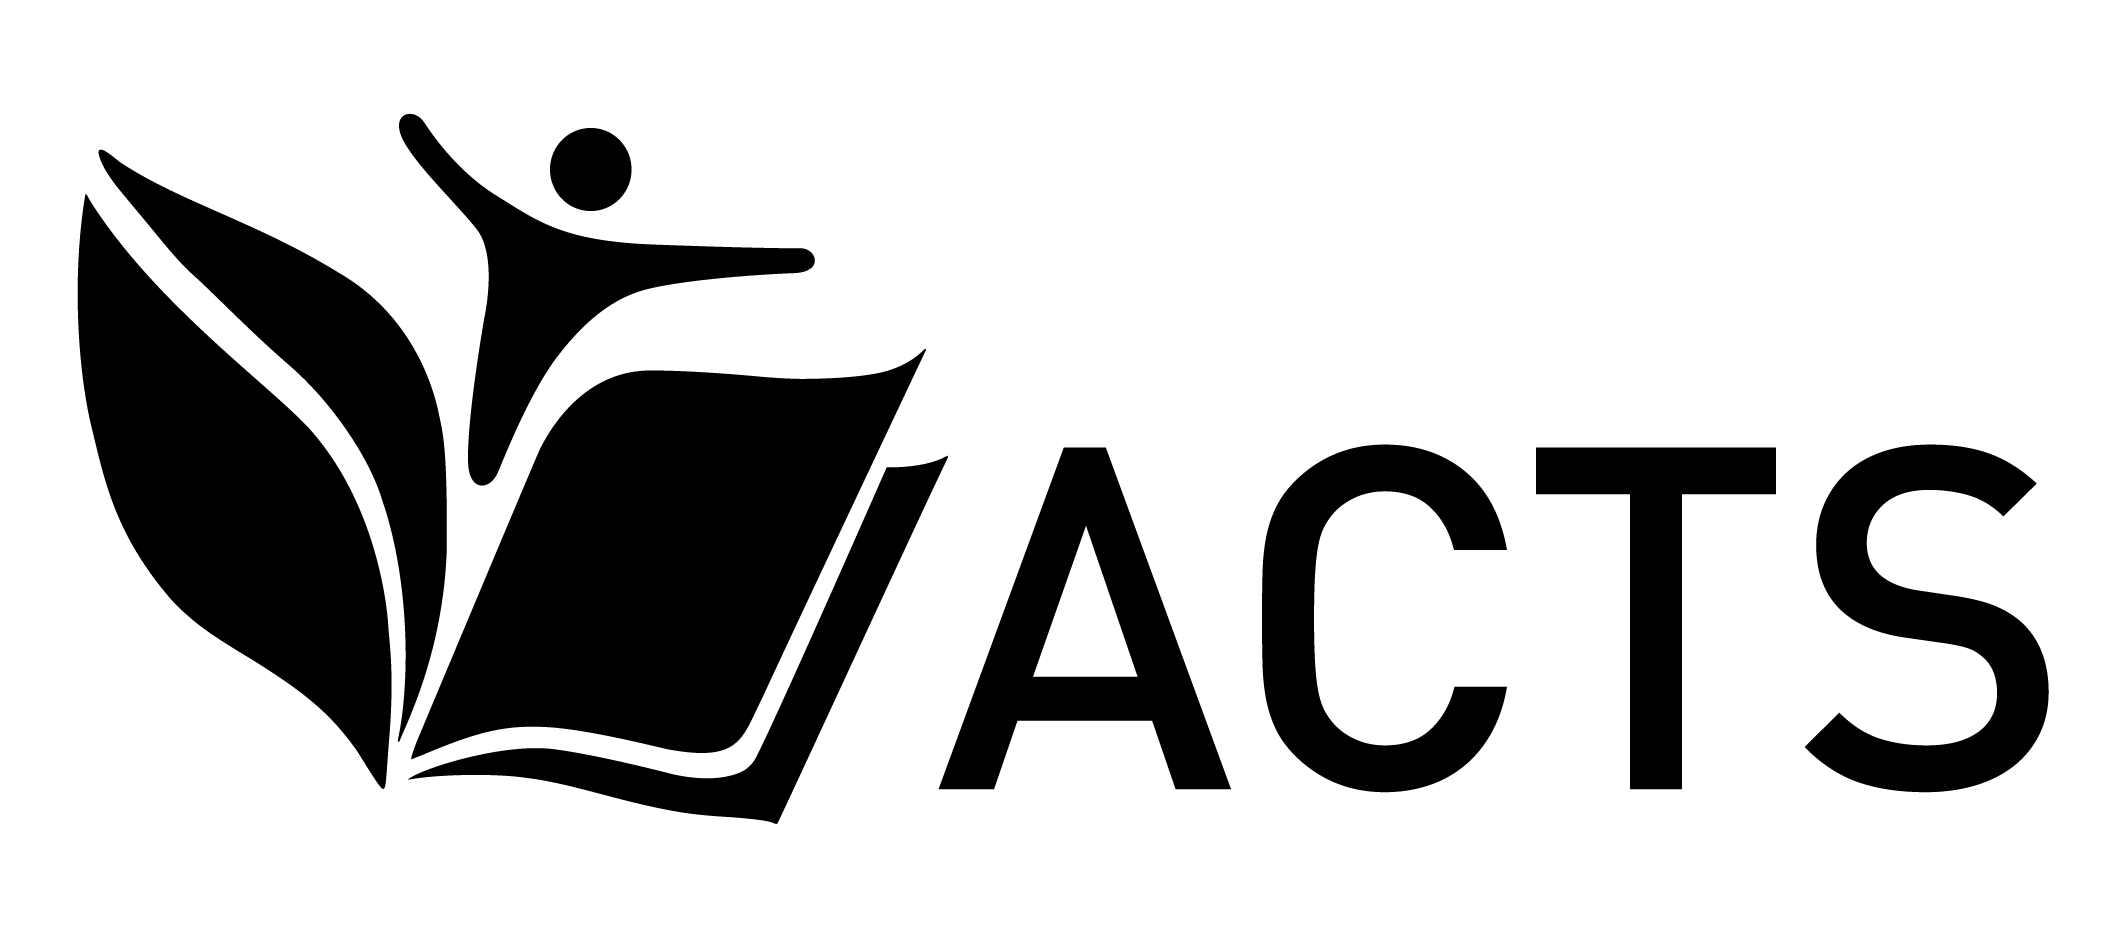 ACTS mono logo with no tagline